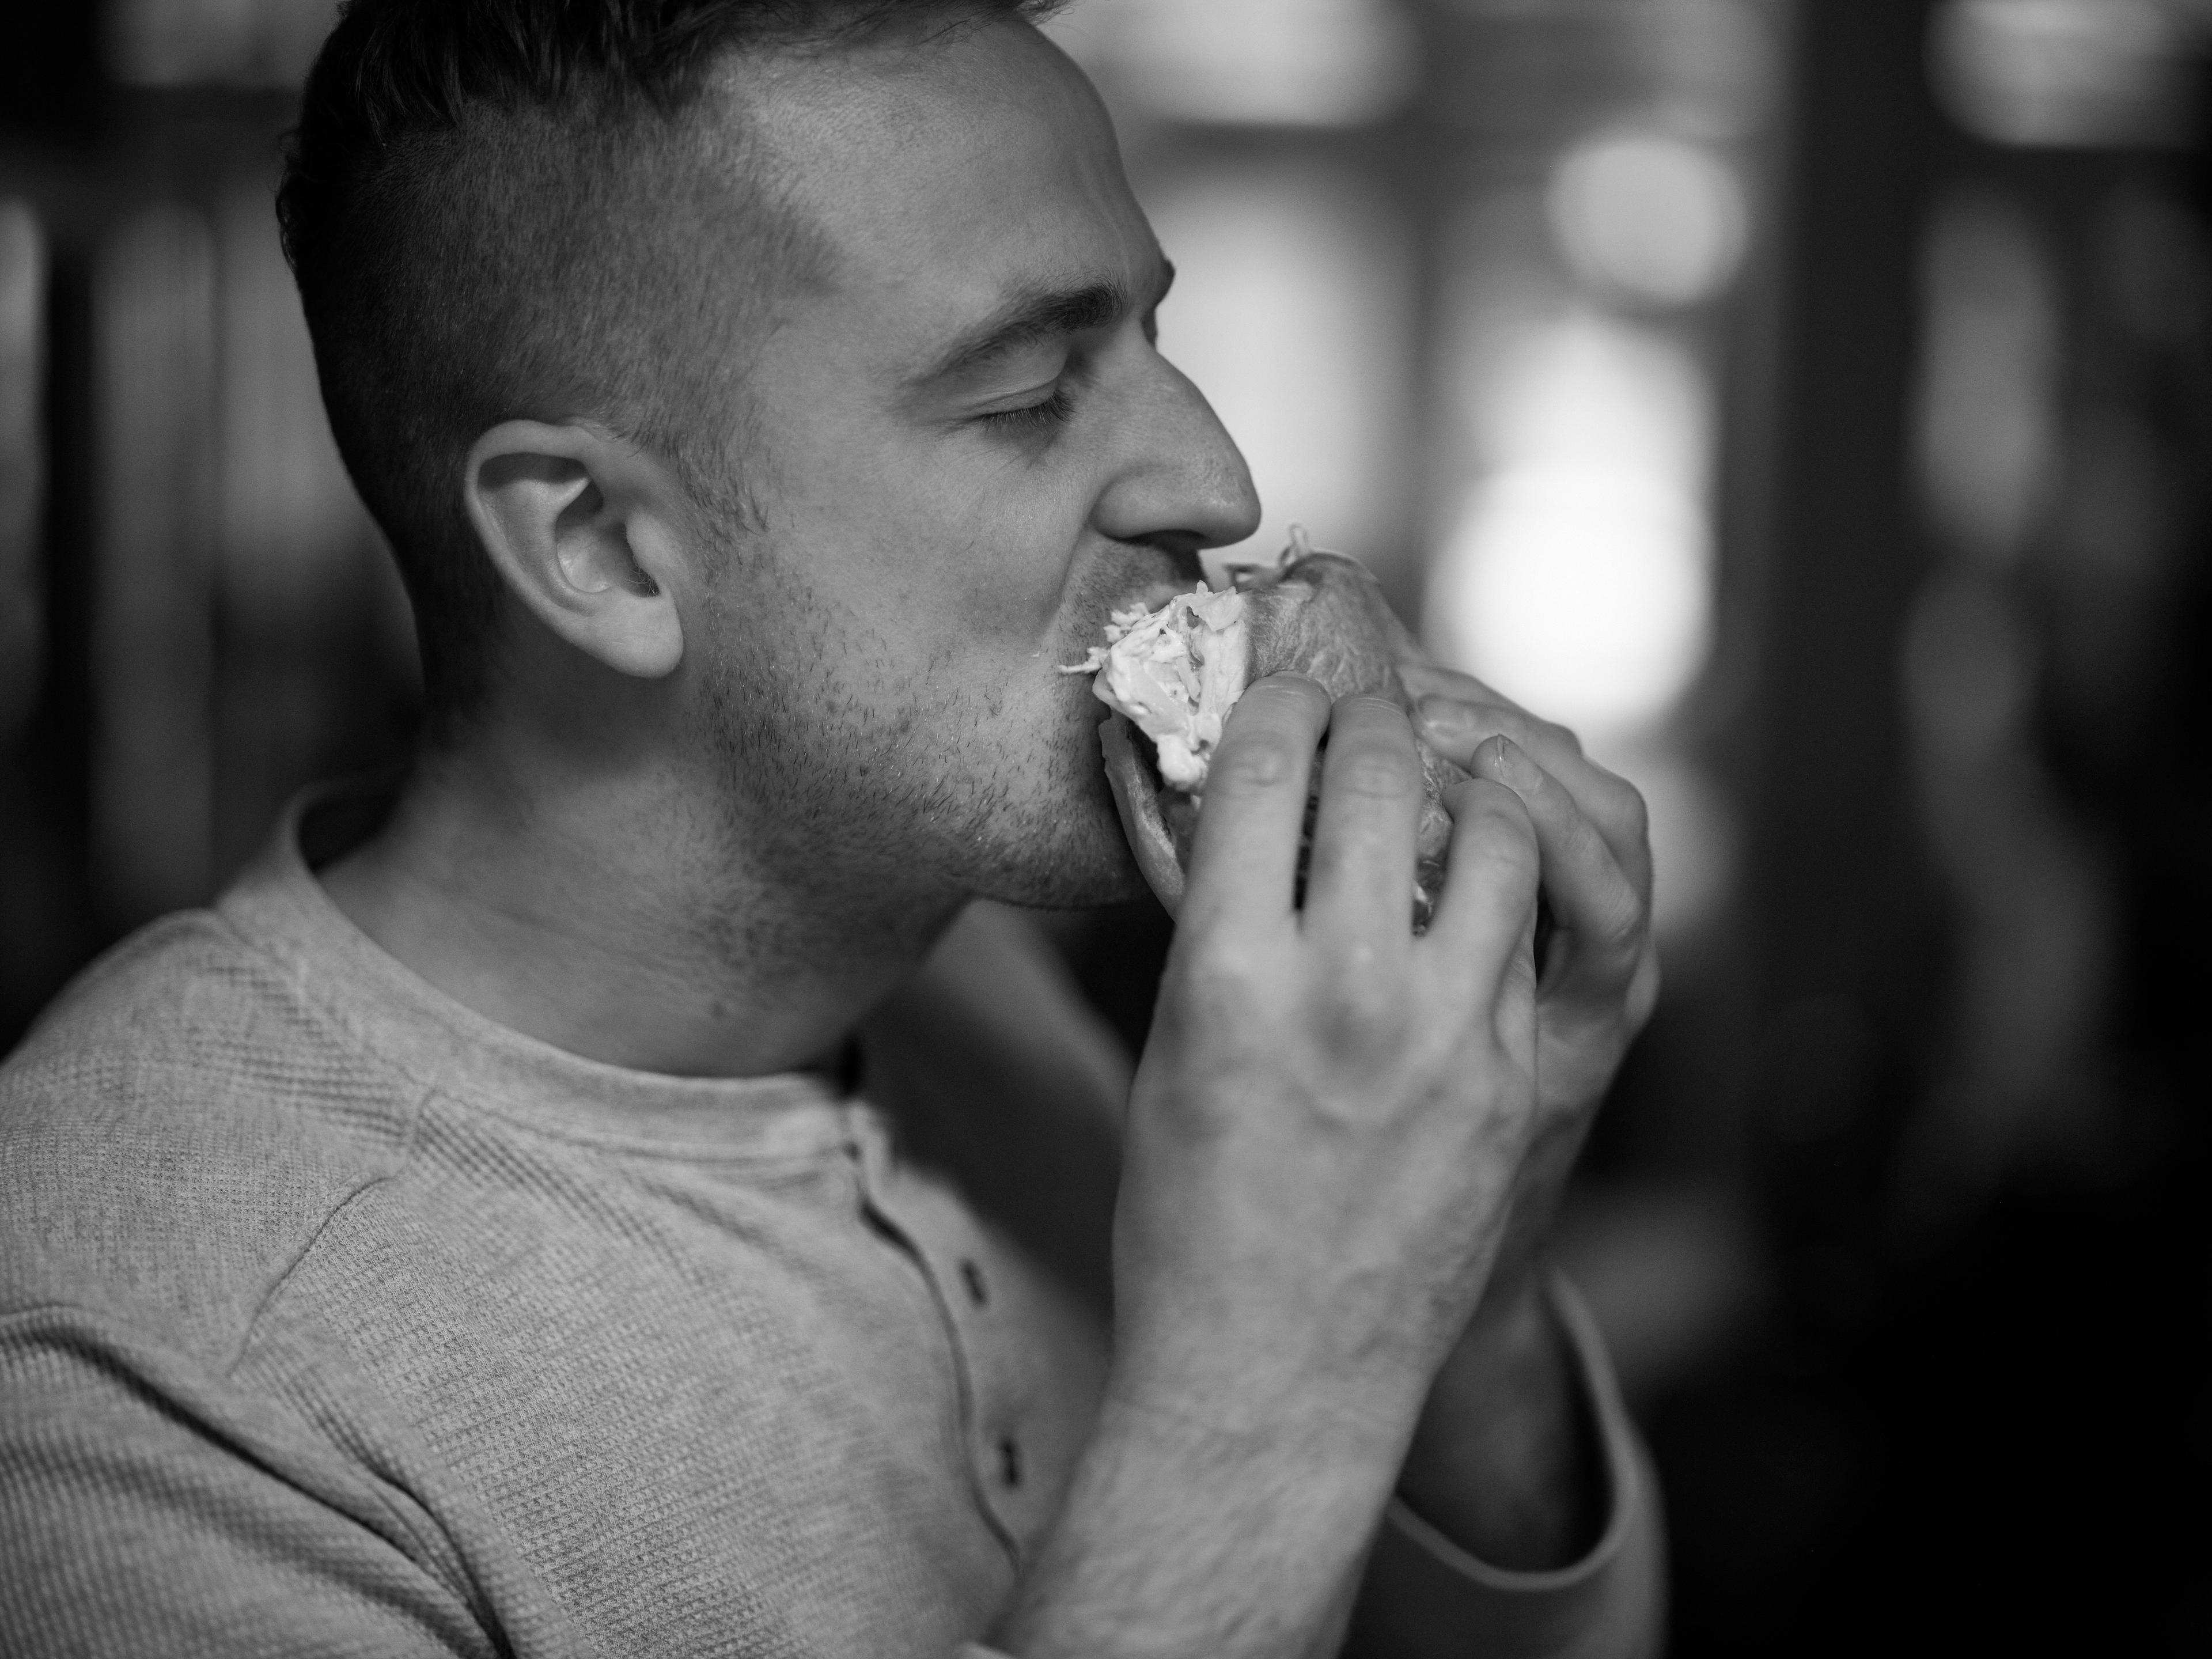 Black & white image of a man eating a hamburger